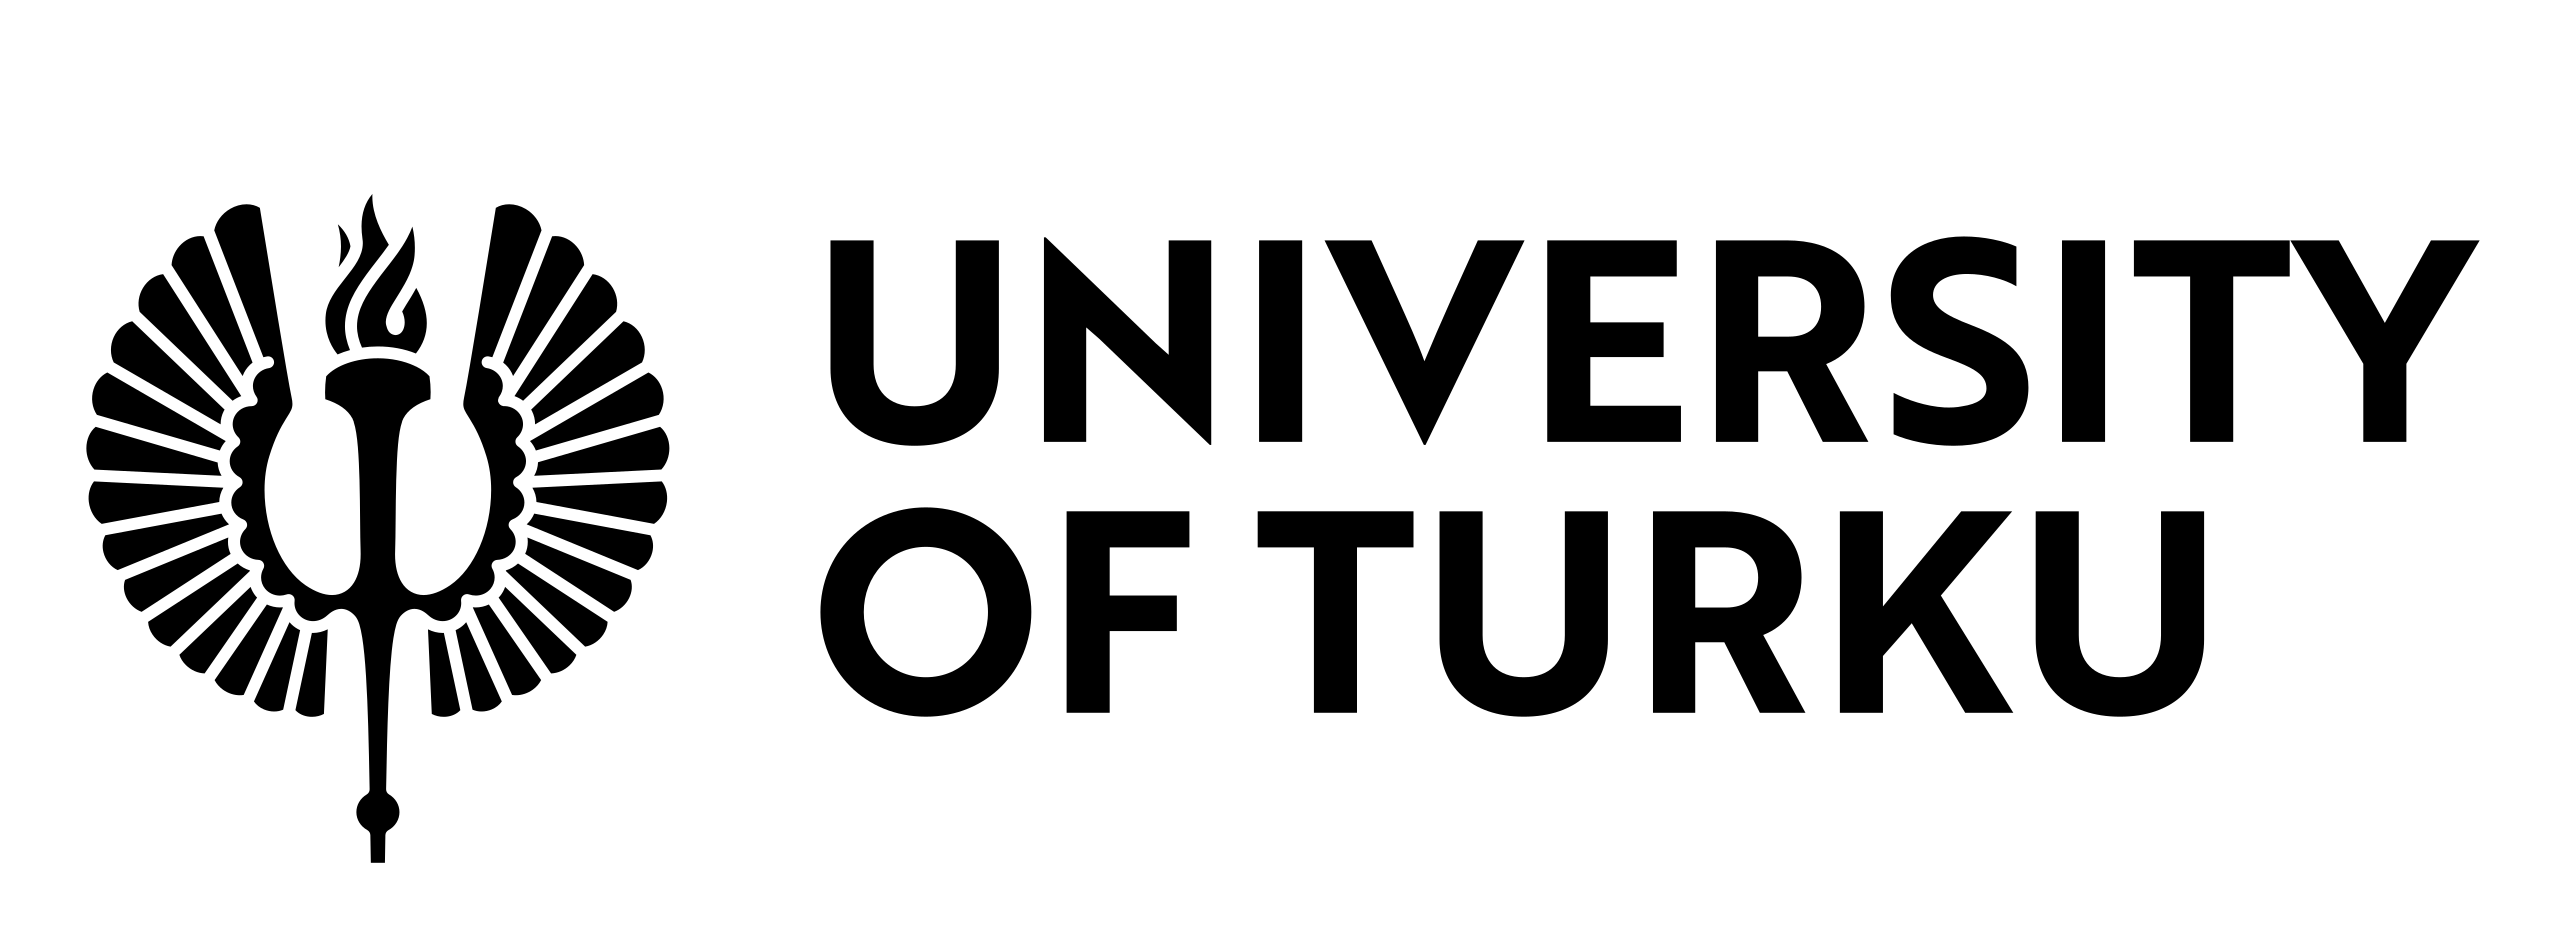 Edu topics logo